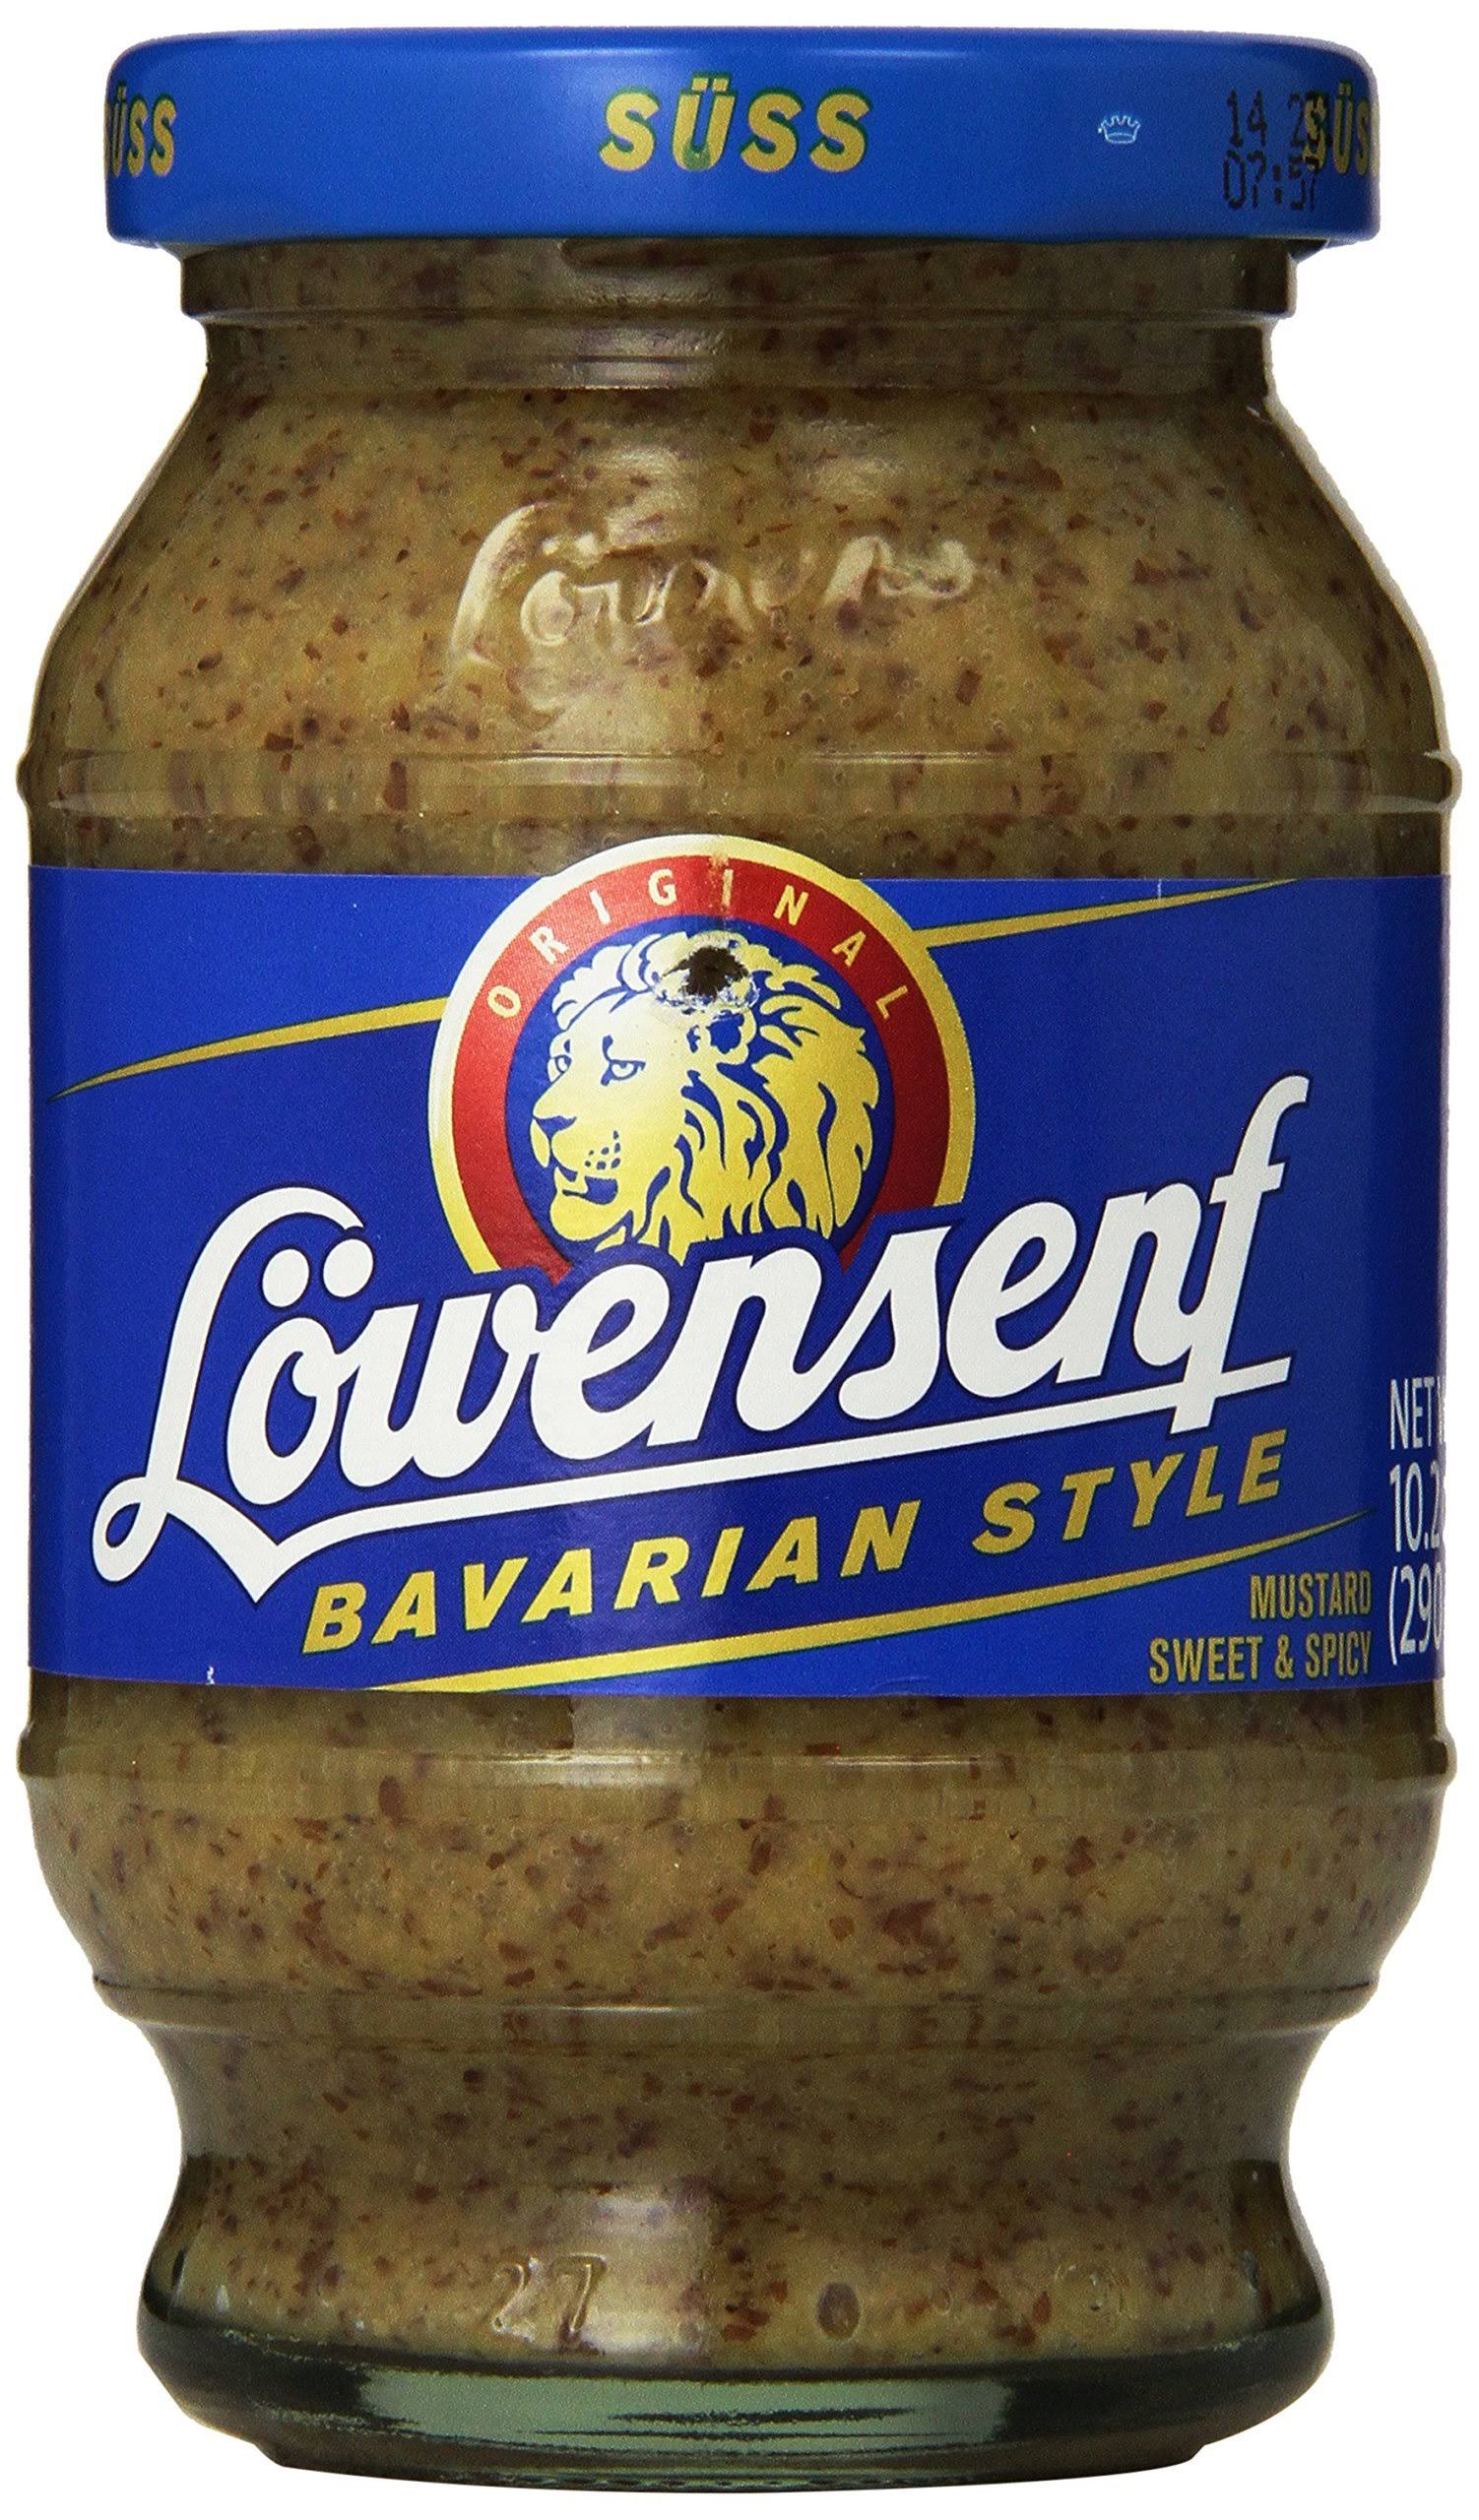 Lowensenf Mustard Jar - Bavarian Style, Sweet and Spicy